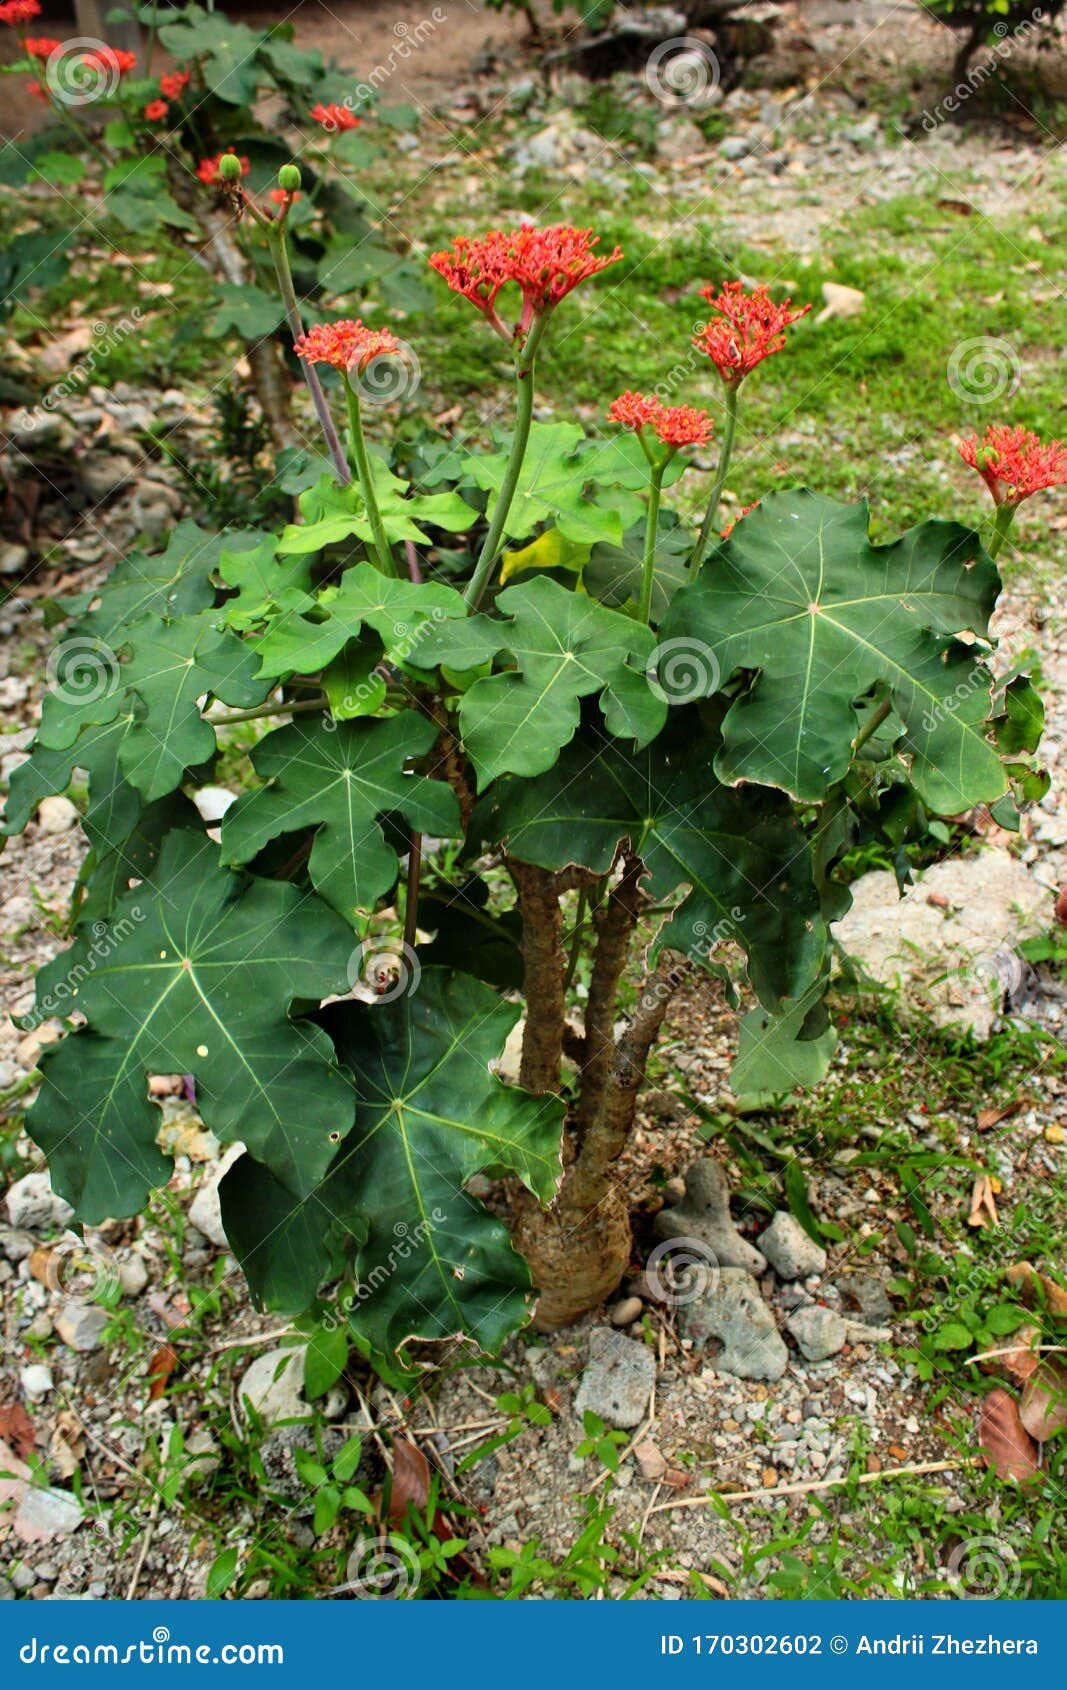 Gout Plant or Guatemalan Rhubarb. Jatropha Podagrica Stock Photo - of color, botany: 170302602